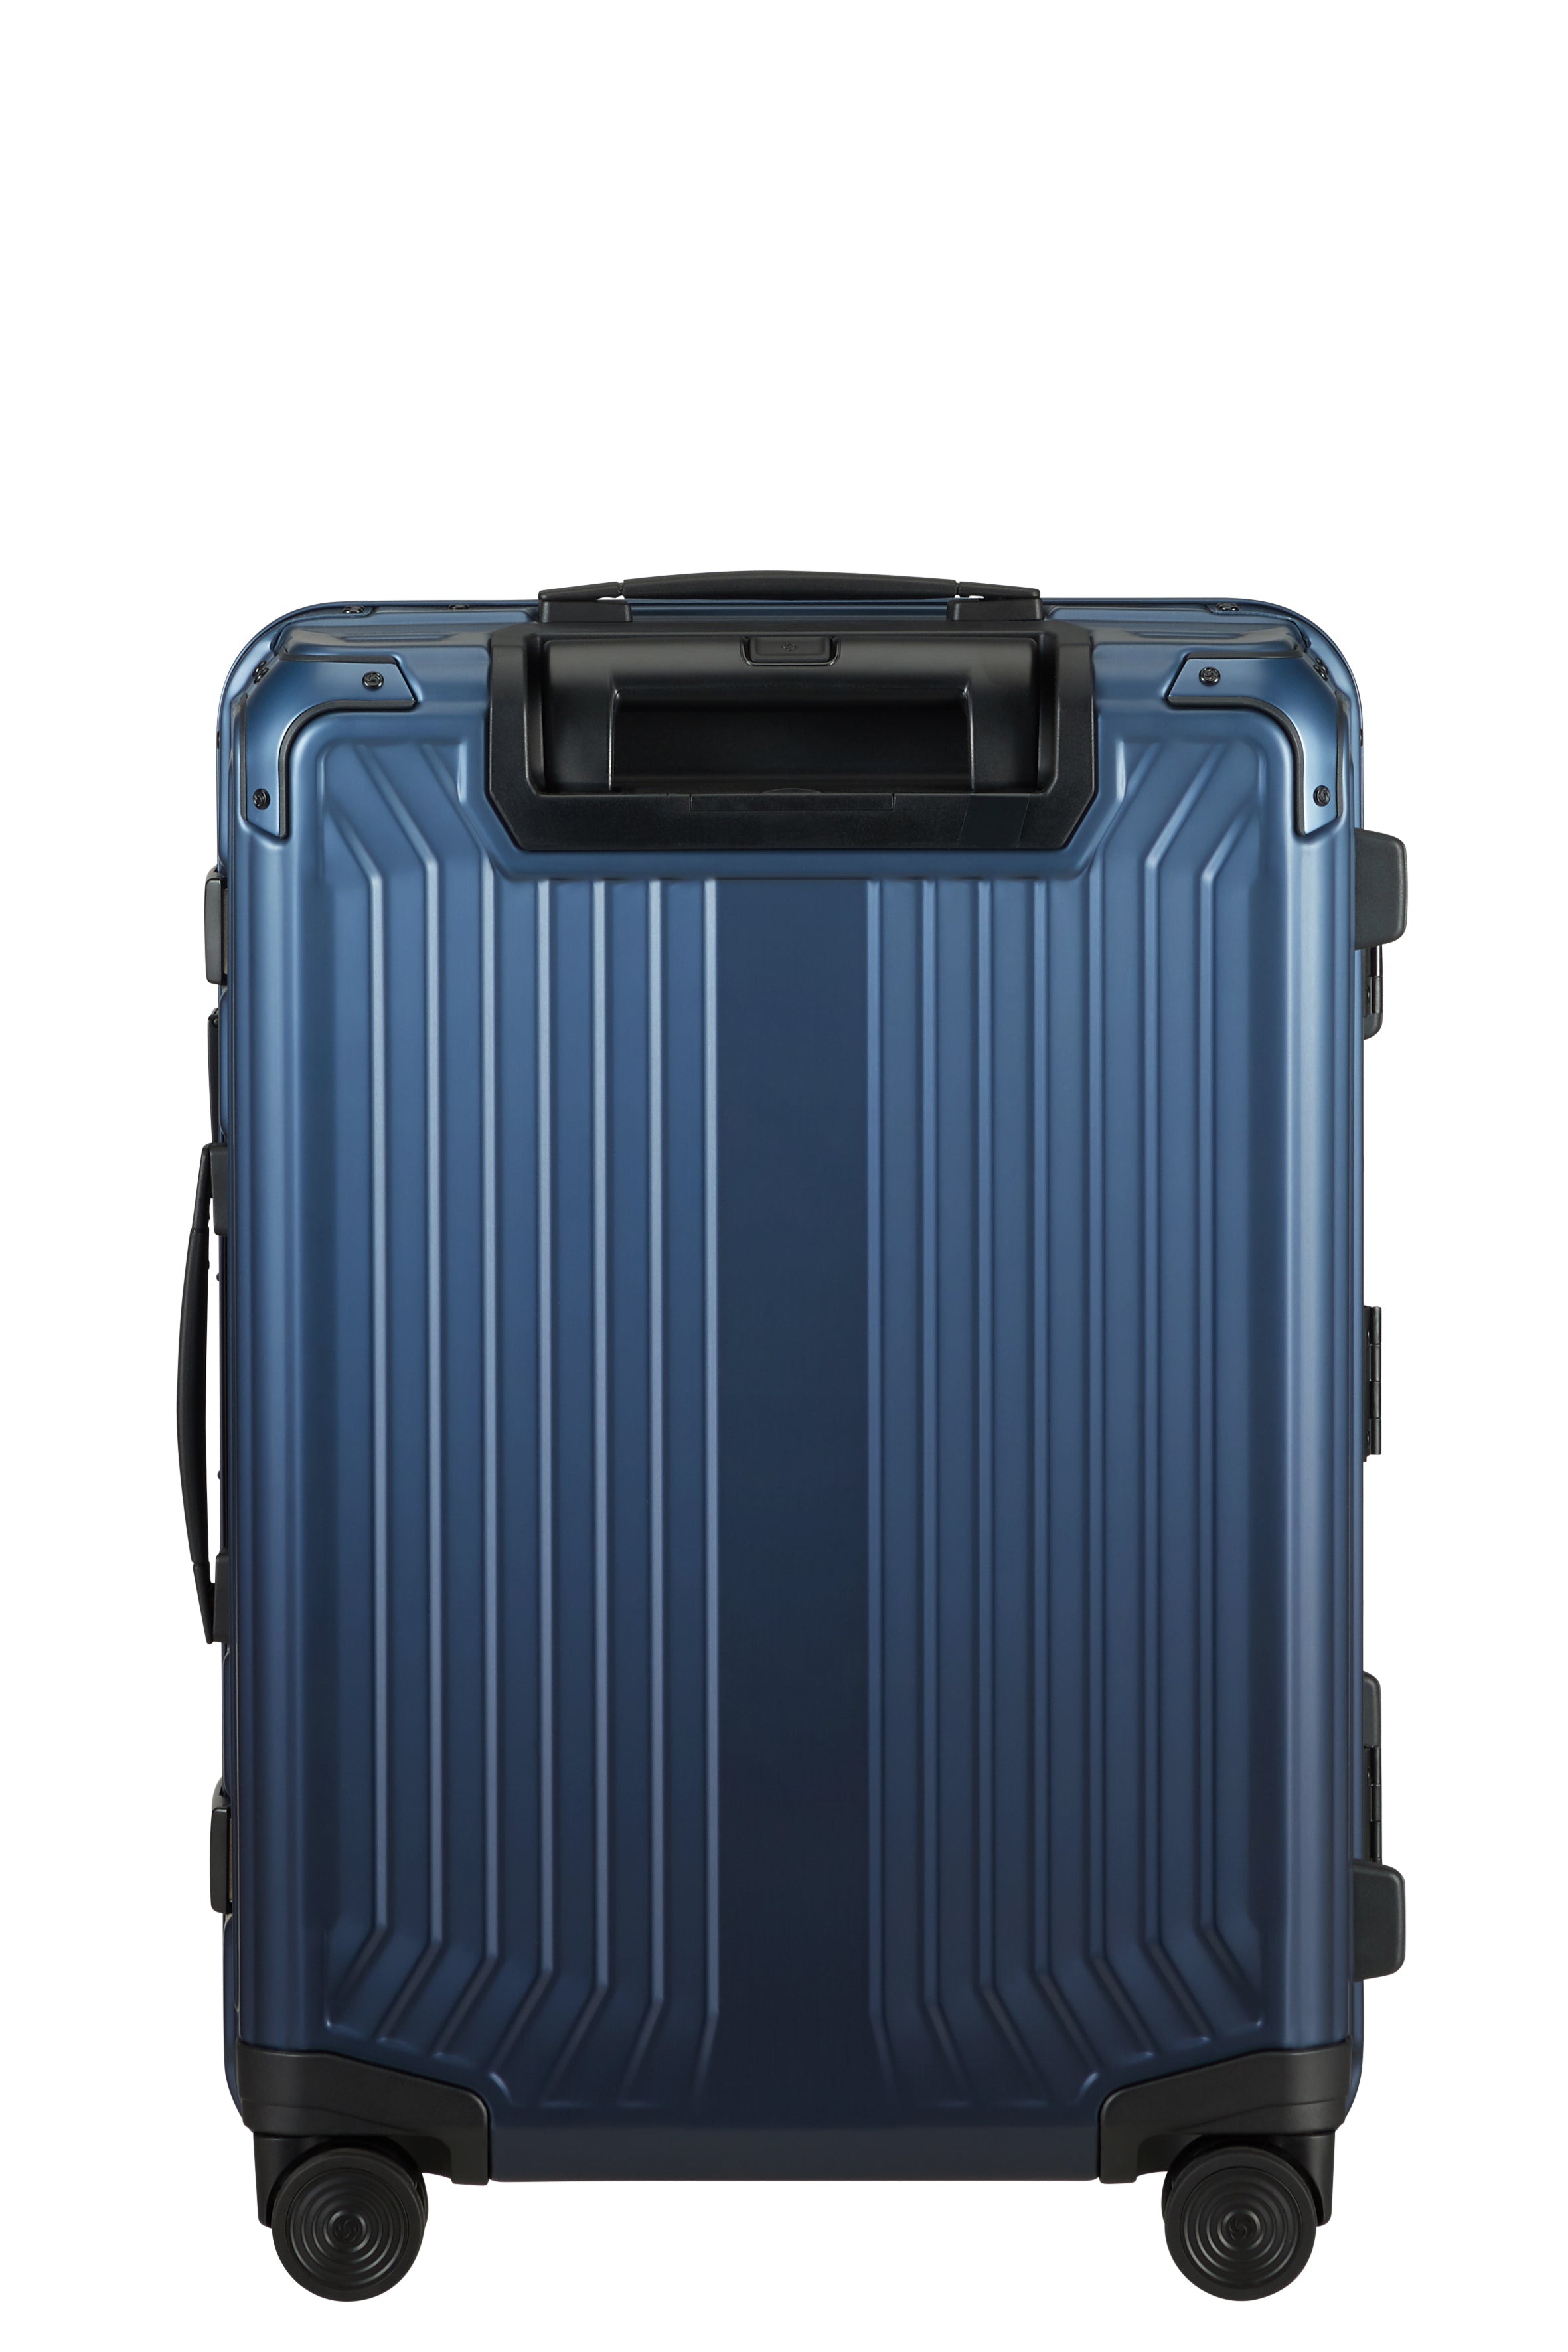 Samsonite - Lite Box ALU 55cm Small 4 Wheel Hard Suitcase - Gradient Midnight-3